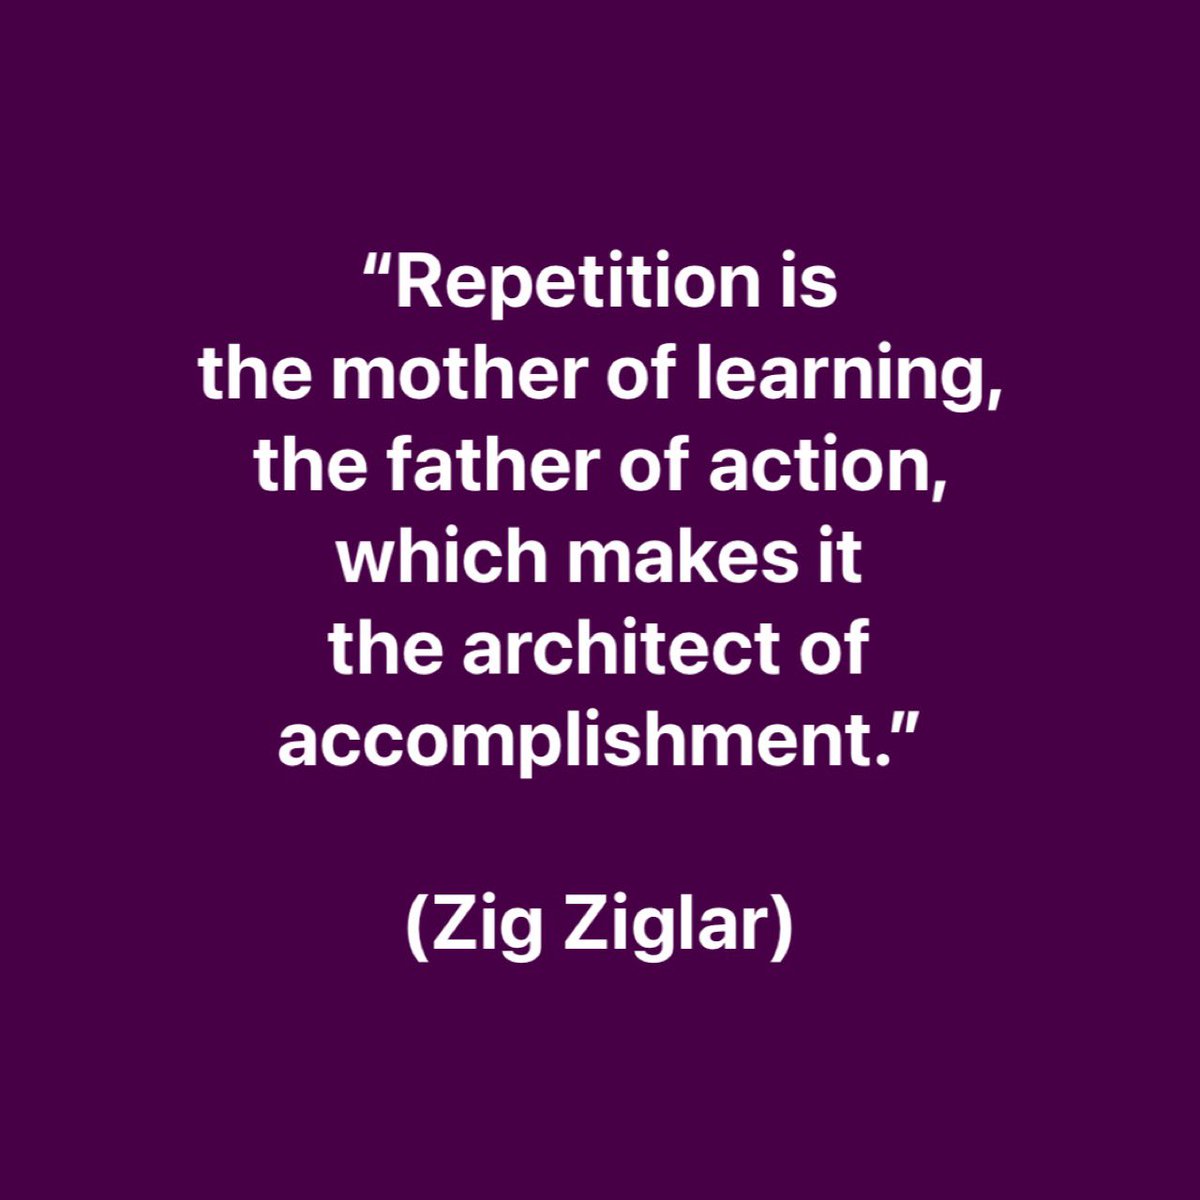 #ZigZiglar #Repetition #Learning #Action #Accomplishment #術 #Jutsu #Technique #Skill #Method #Craft #Art #型 #形 #Kata #Hyeong #Hyung #品勢 #품새 #Pumsae #Form #Pattern #WayOfDoing #運動 #うんどう #Undou #Ejercicio #Exercise #改善 #かいぜん #Kaizen #Mejora #Improvement #Repeat